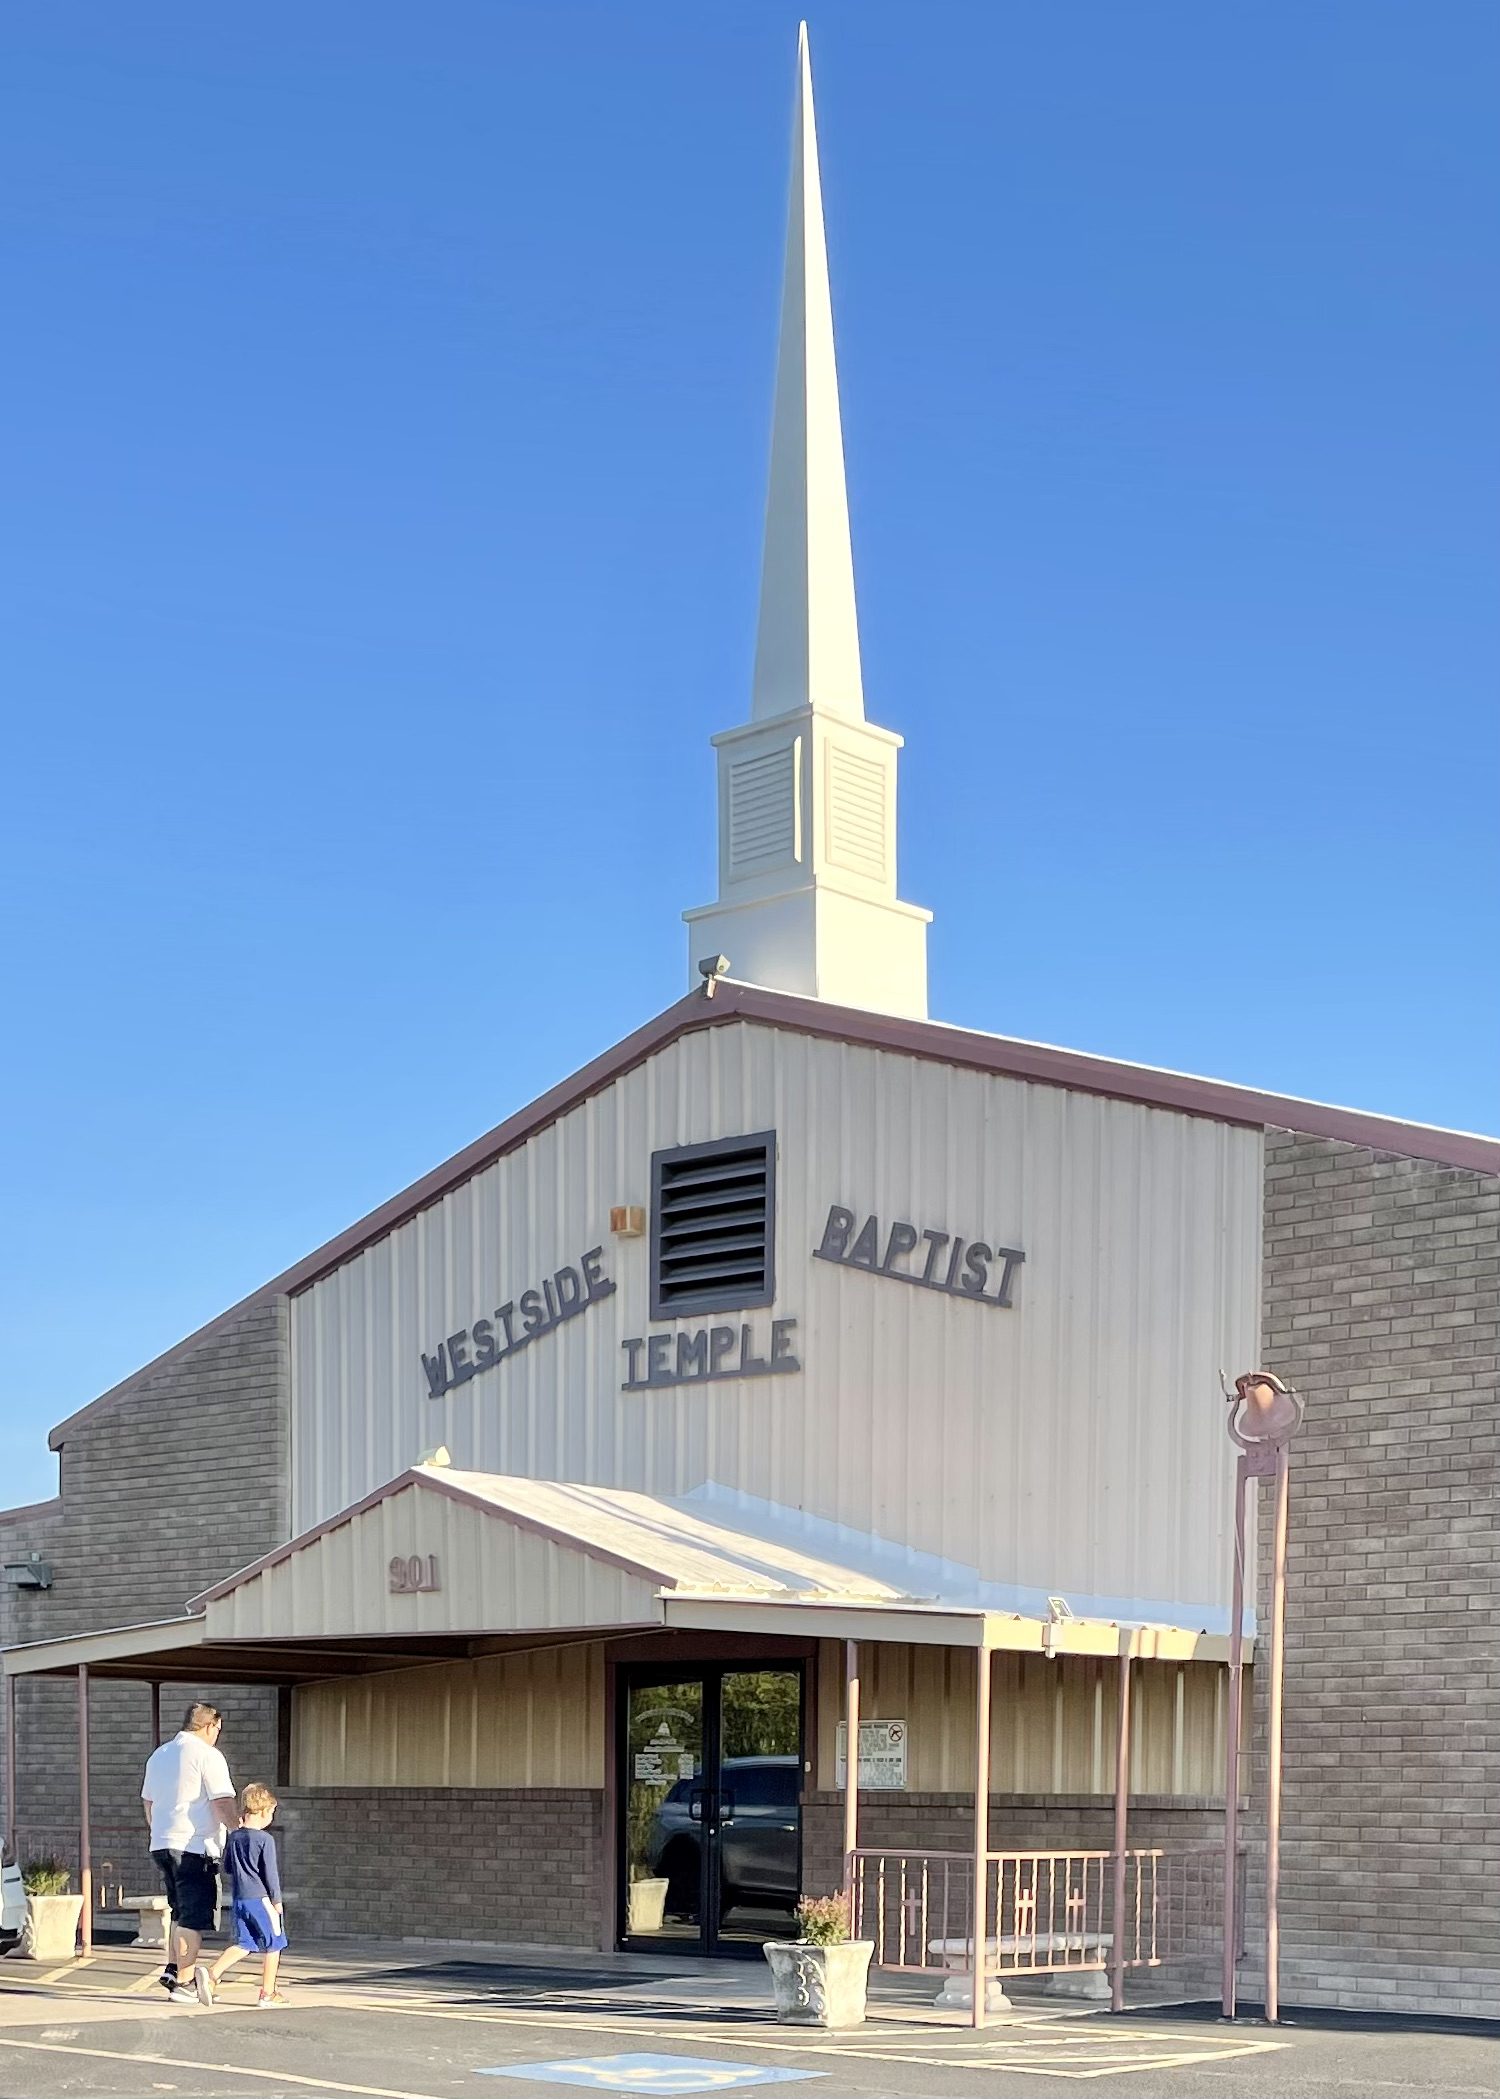 About Westside Baptist Temple